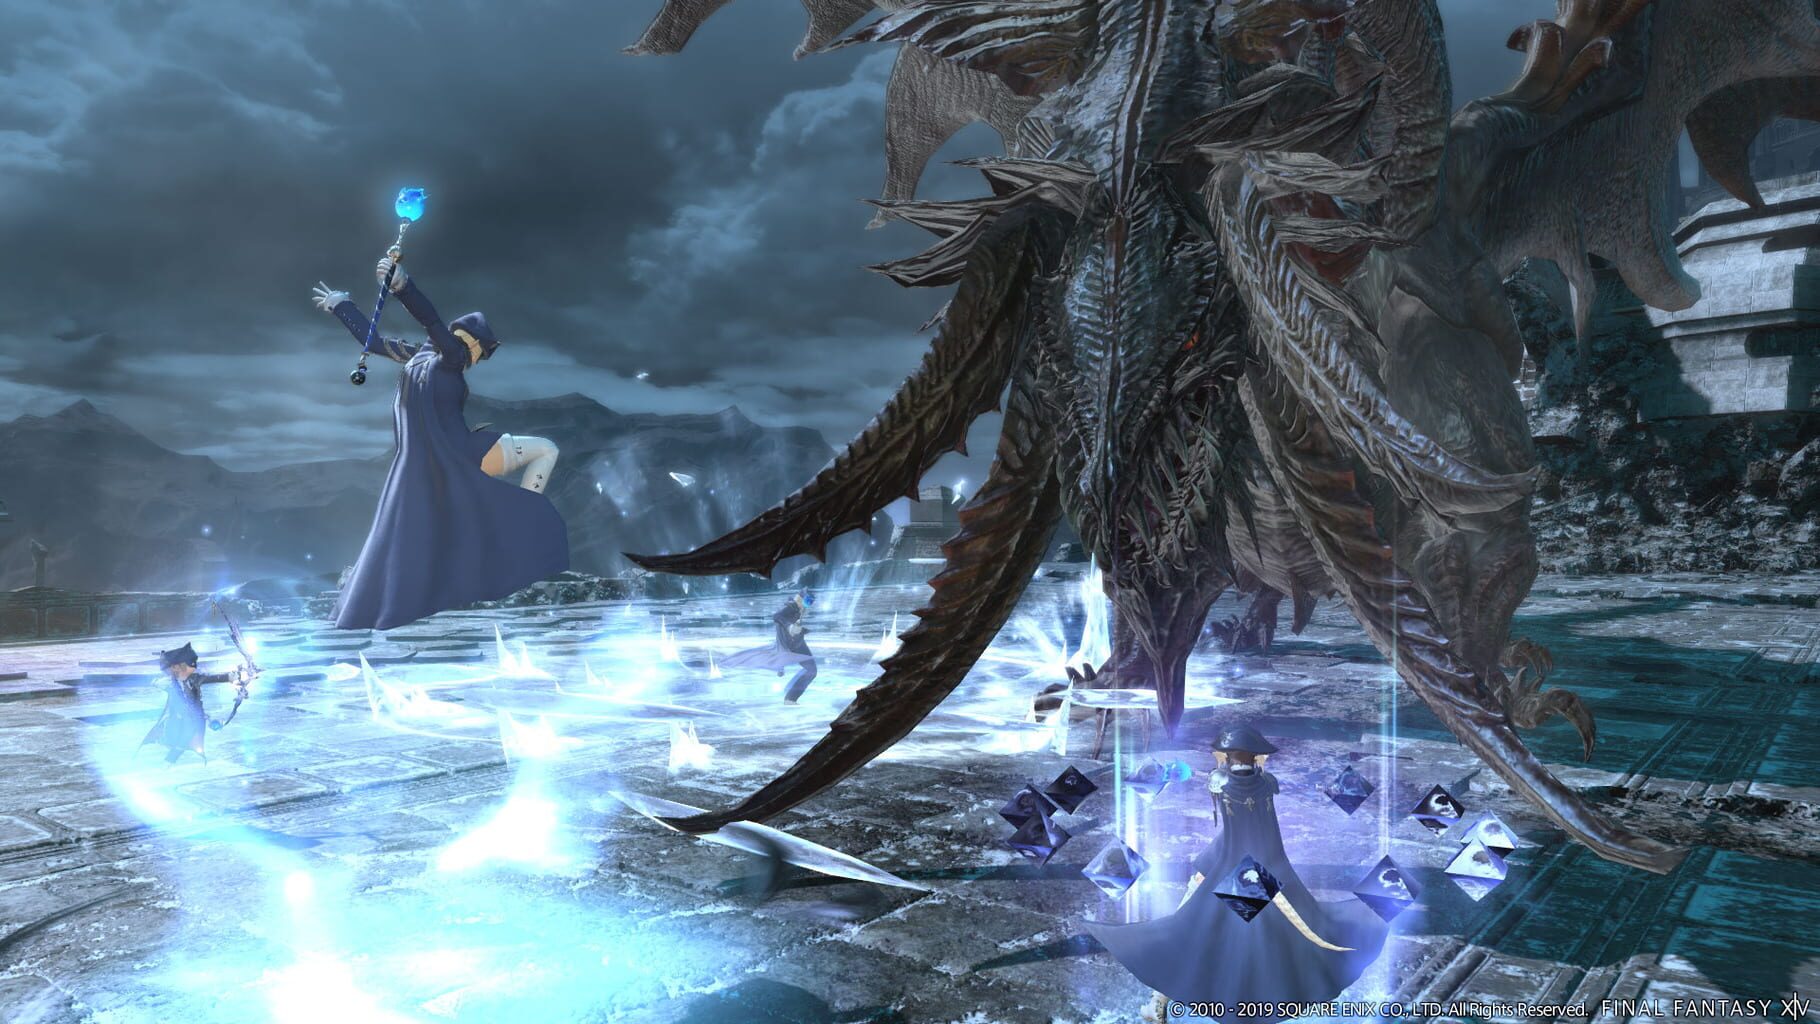 Captura de pantalla - Final Fantasy XIV: Vows of Virtue, Deeds of Cruelty